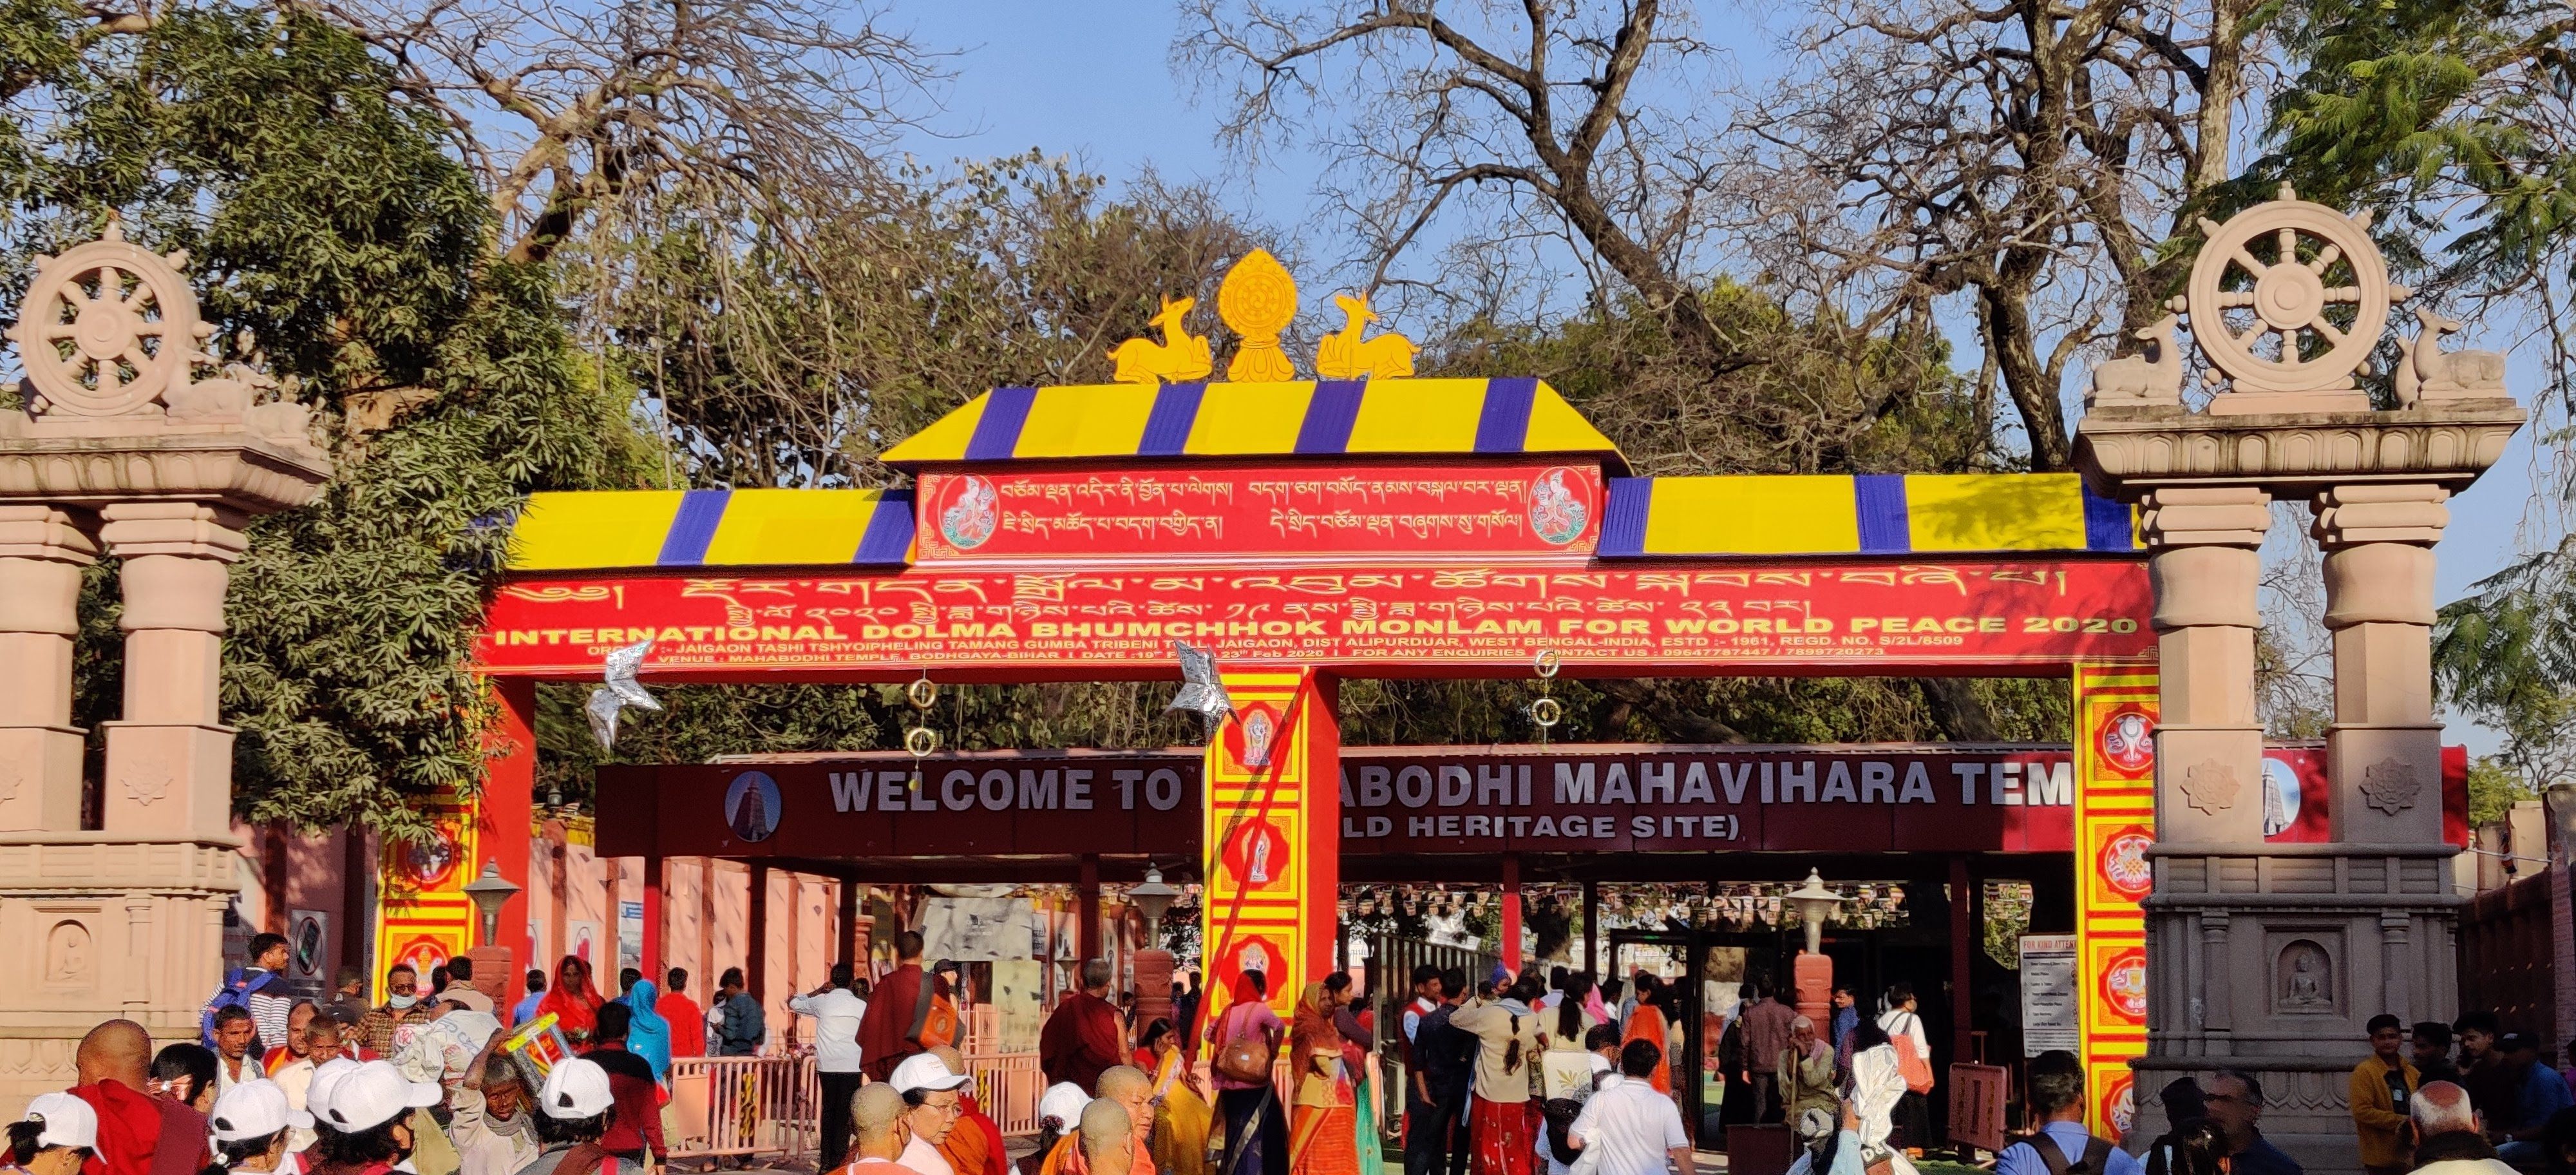 Entrance gate of Mahaboddhi Temple, Gaya, Bihar, India